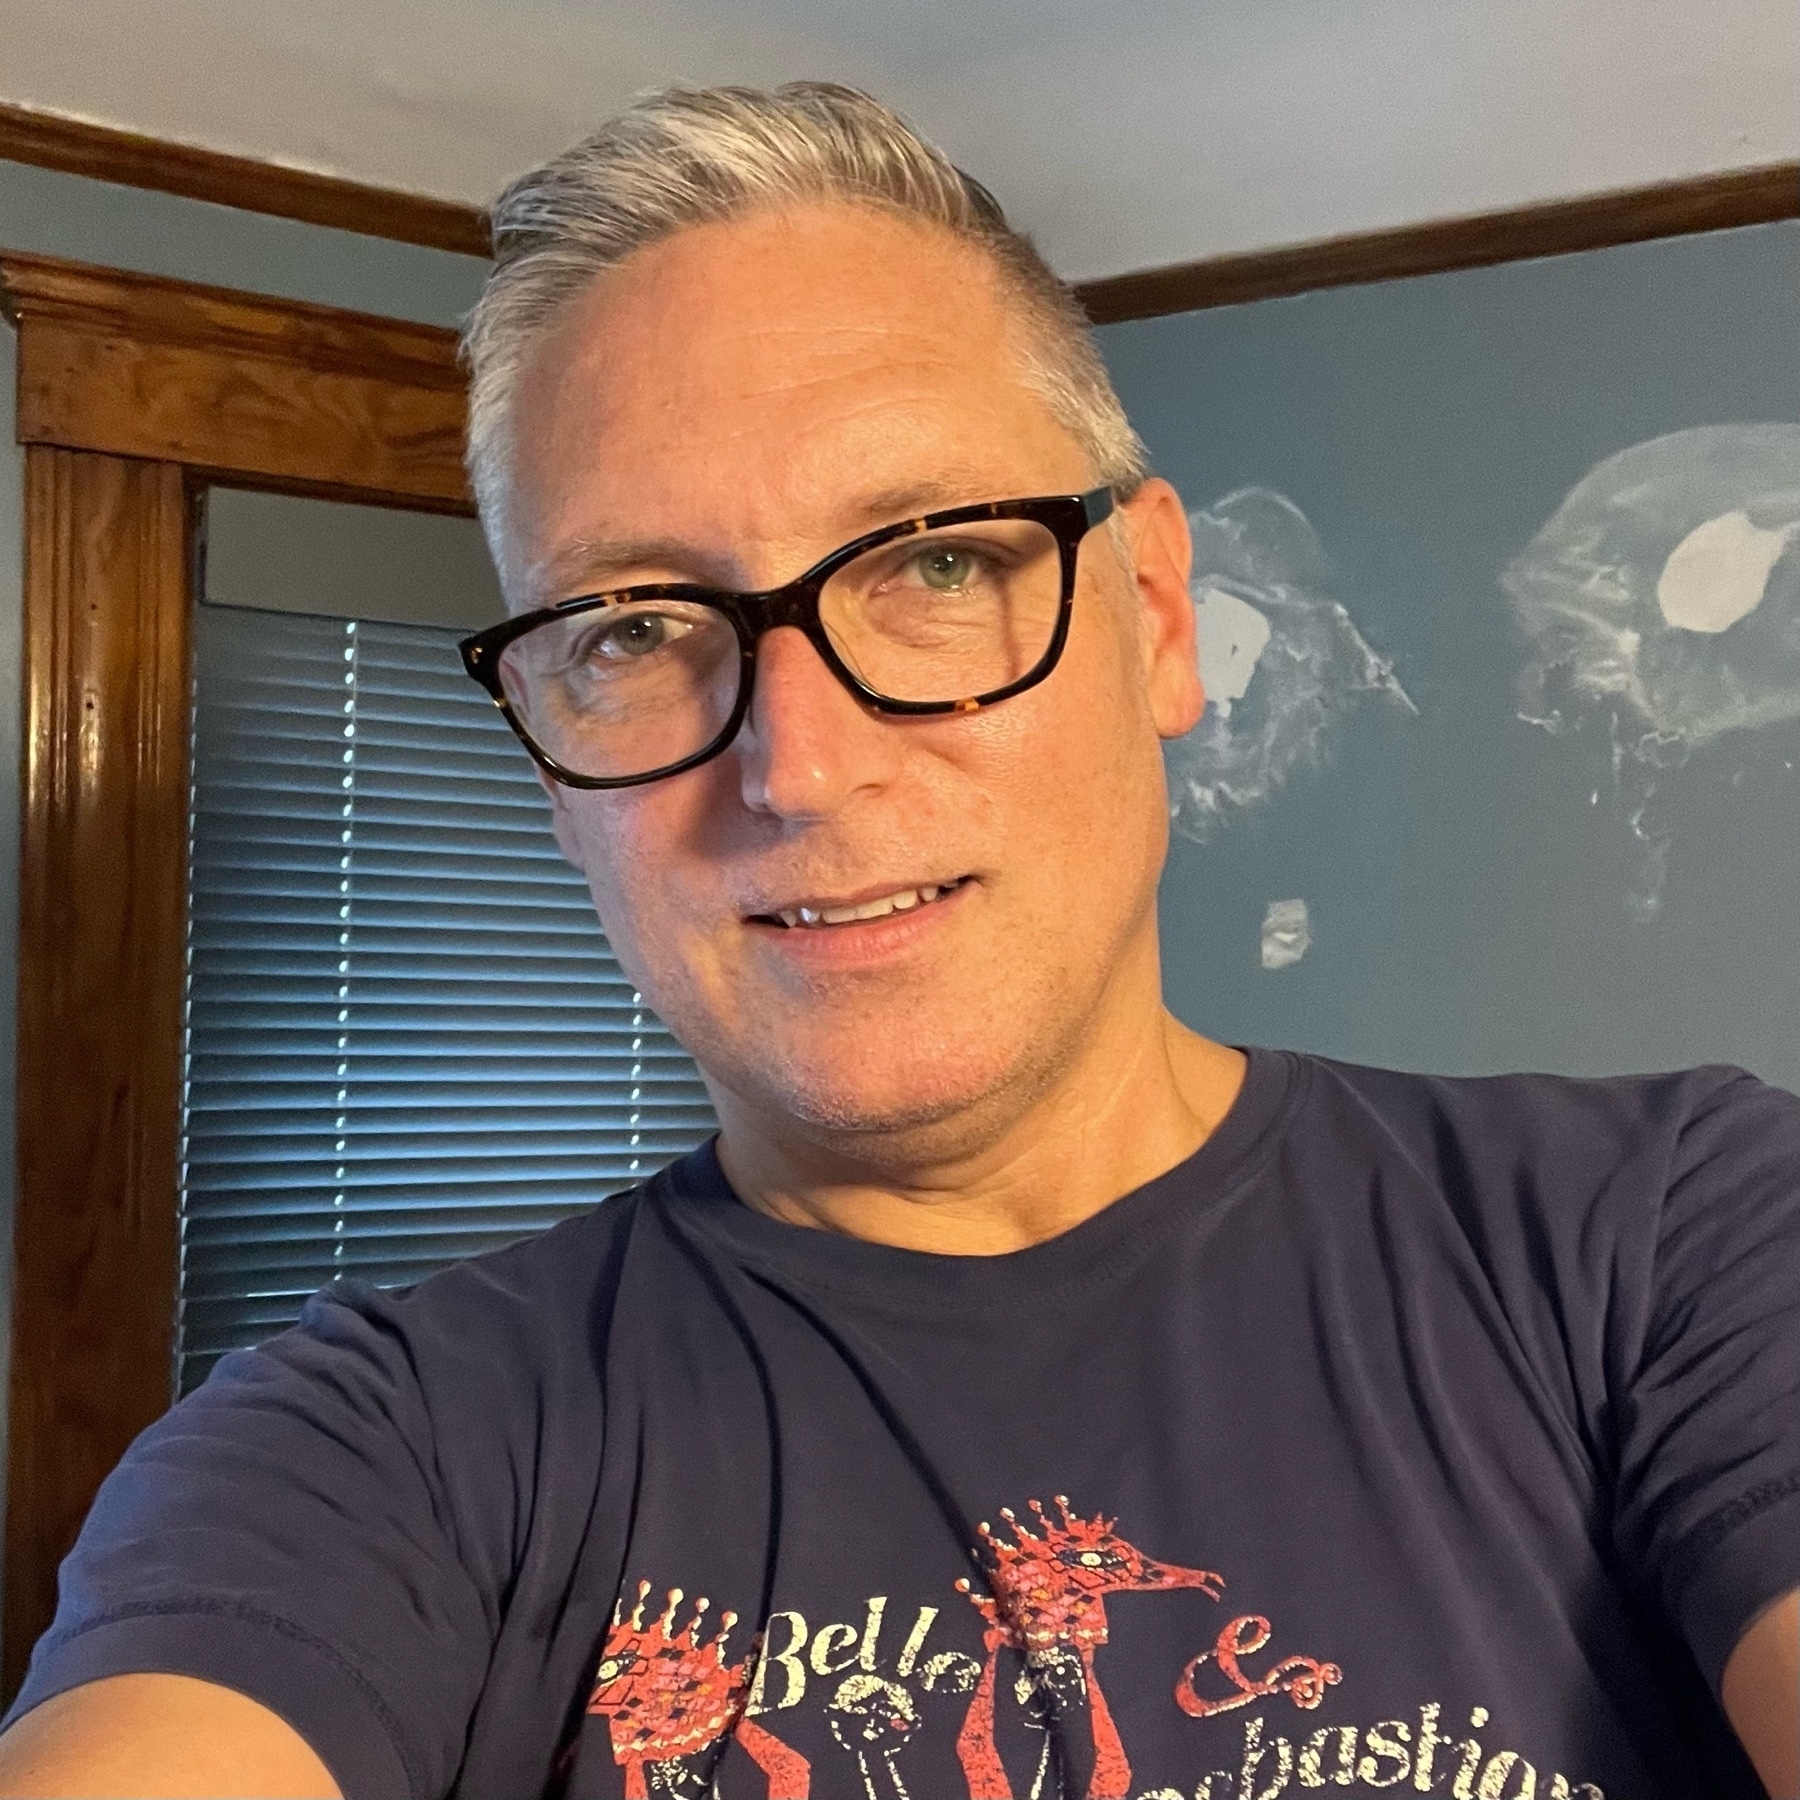 selfie of a caucasian man with grey hair wearing glasses, wearing a Belle @ Sebastian t-shirt